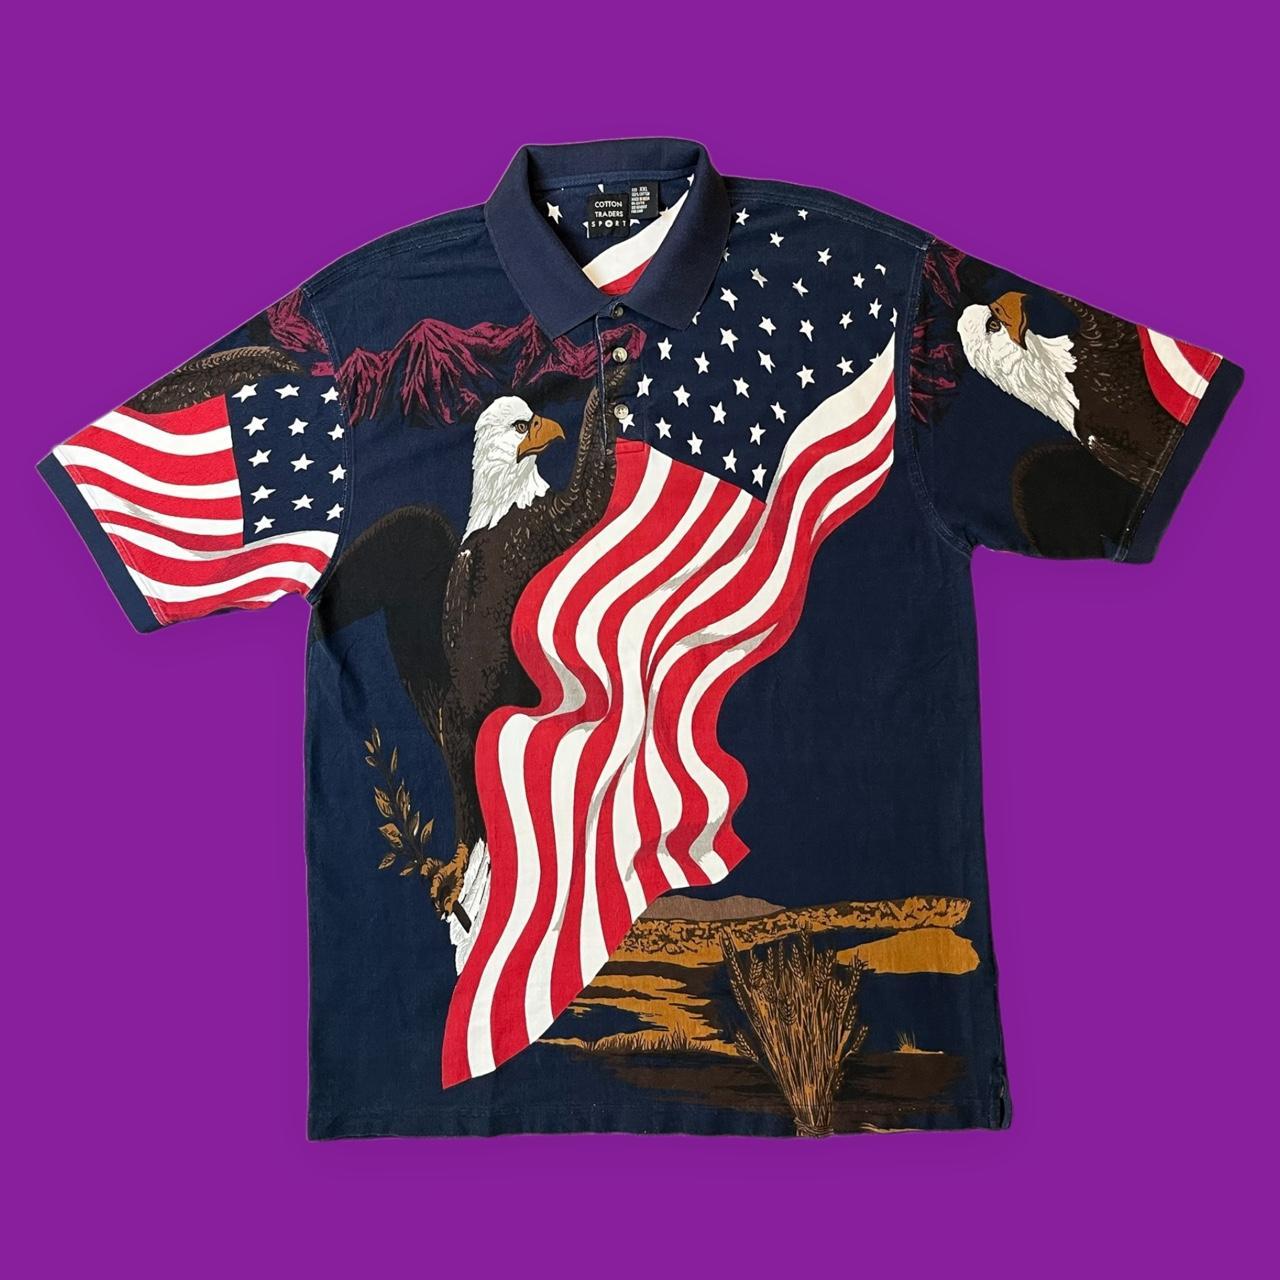 Product Image 1 - Retro American pride polo shirt